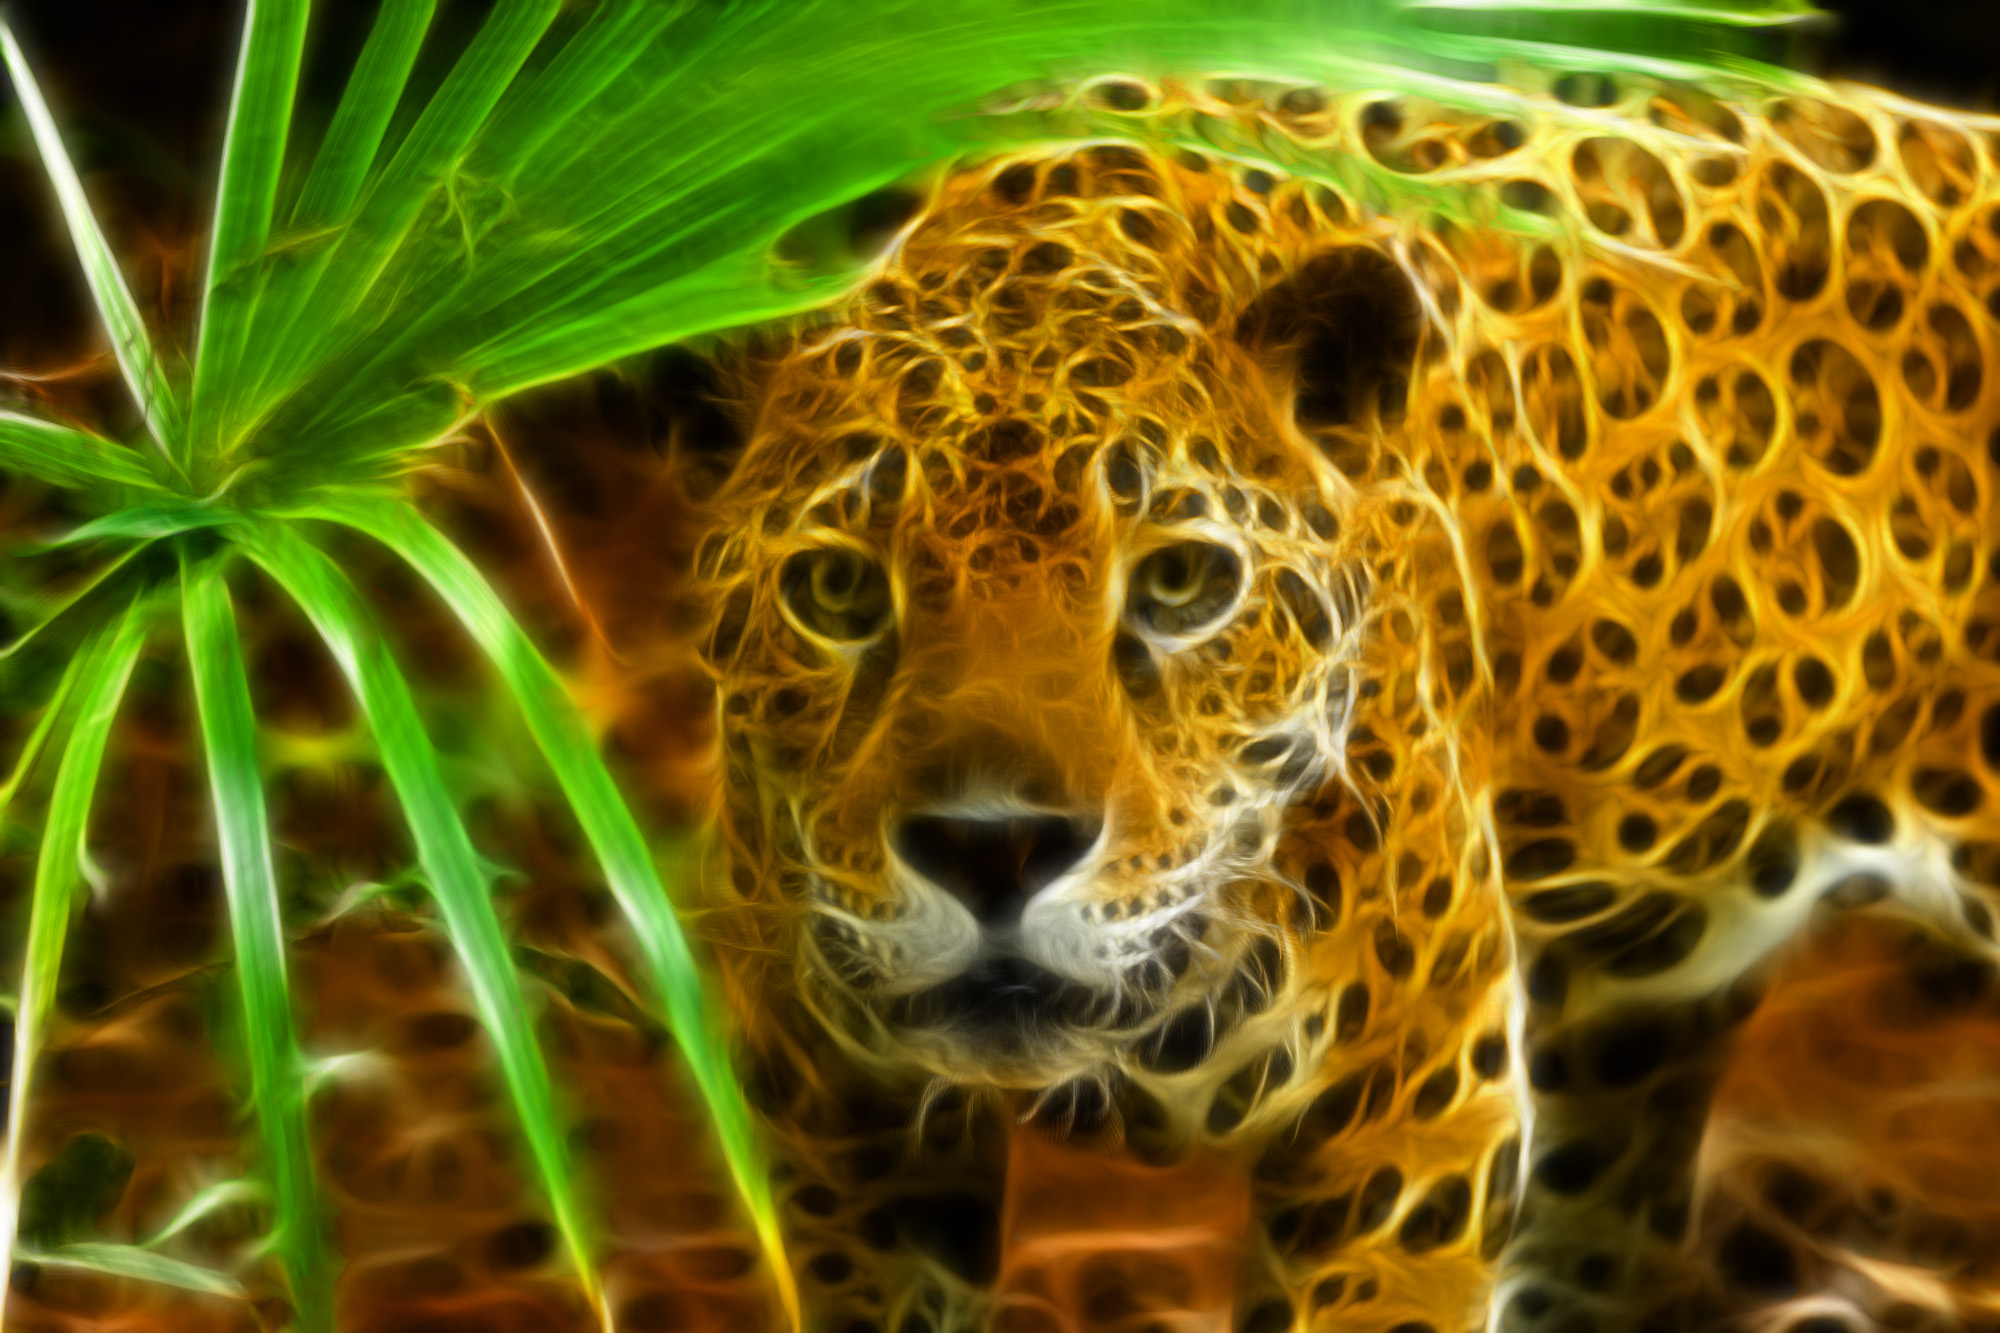 animals, Fractalius, jaguars - desktop wallpaper